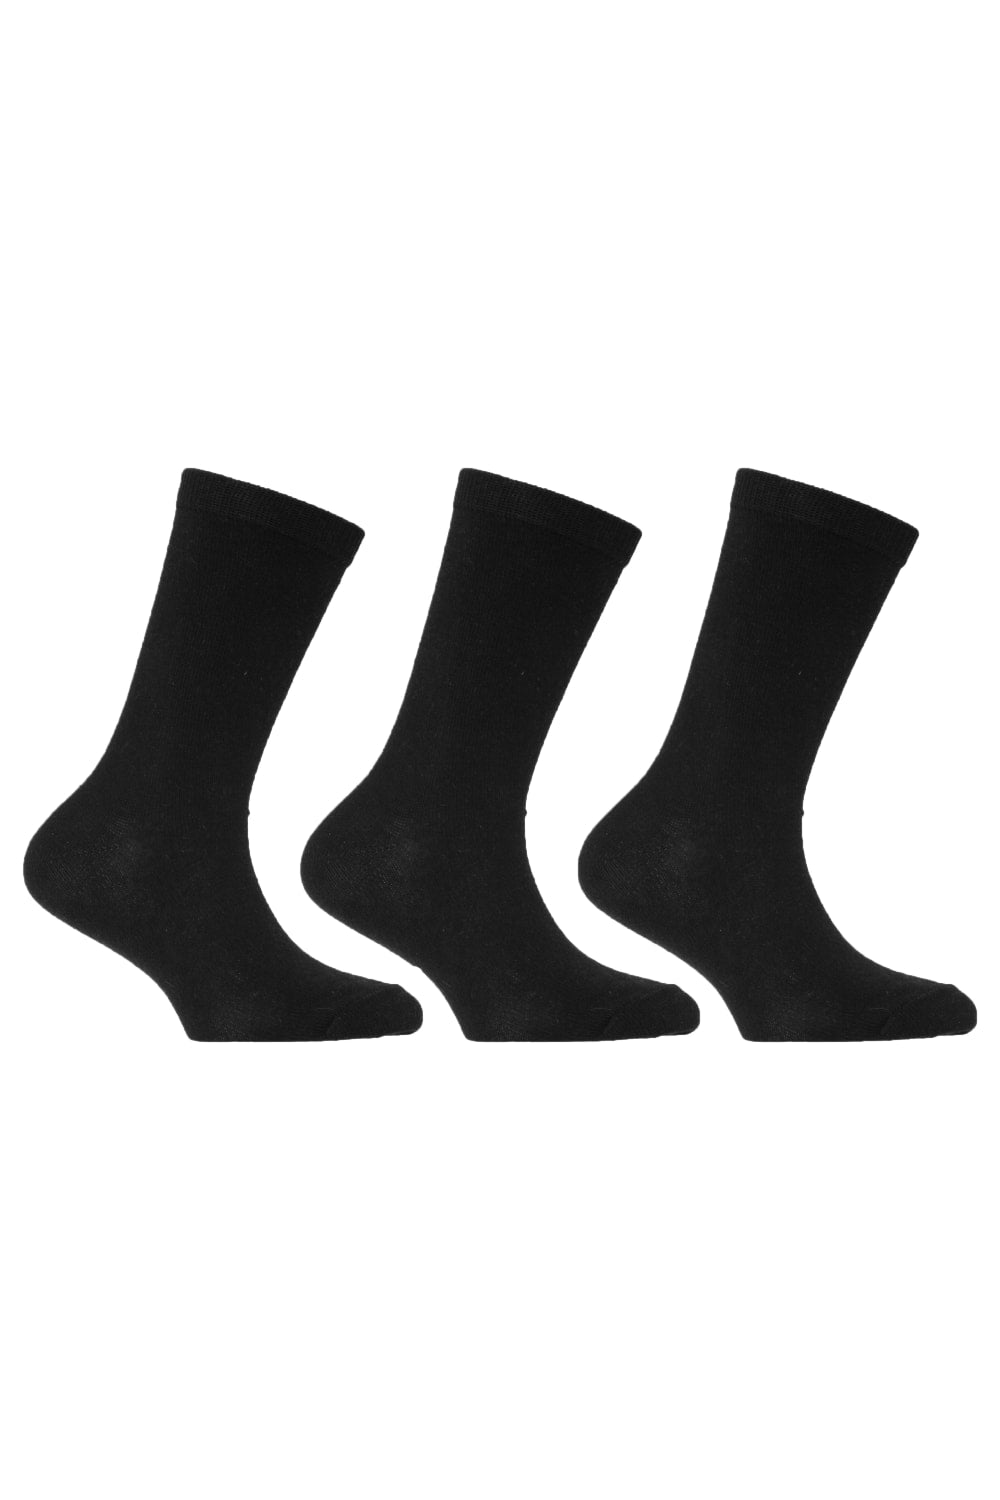 Childrens/Kids Plain Cotton Rich School Socks (Pack of 3) (Black)